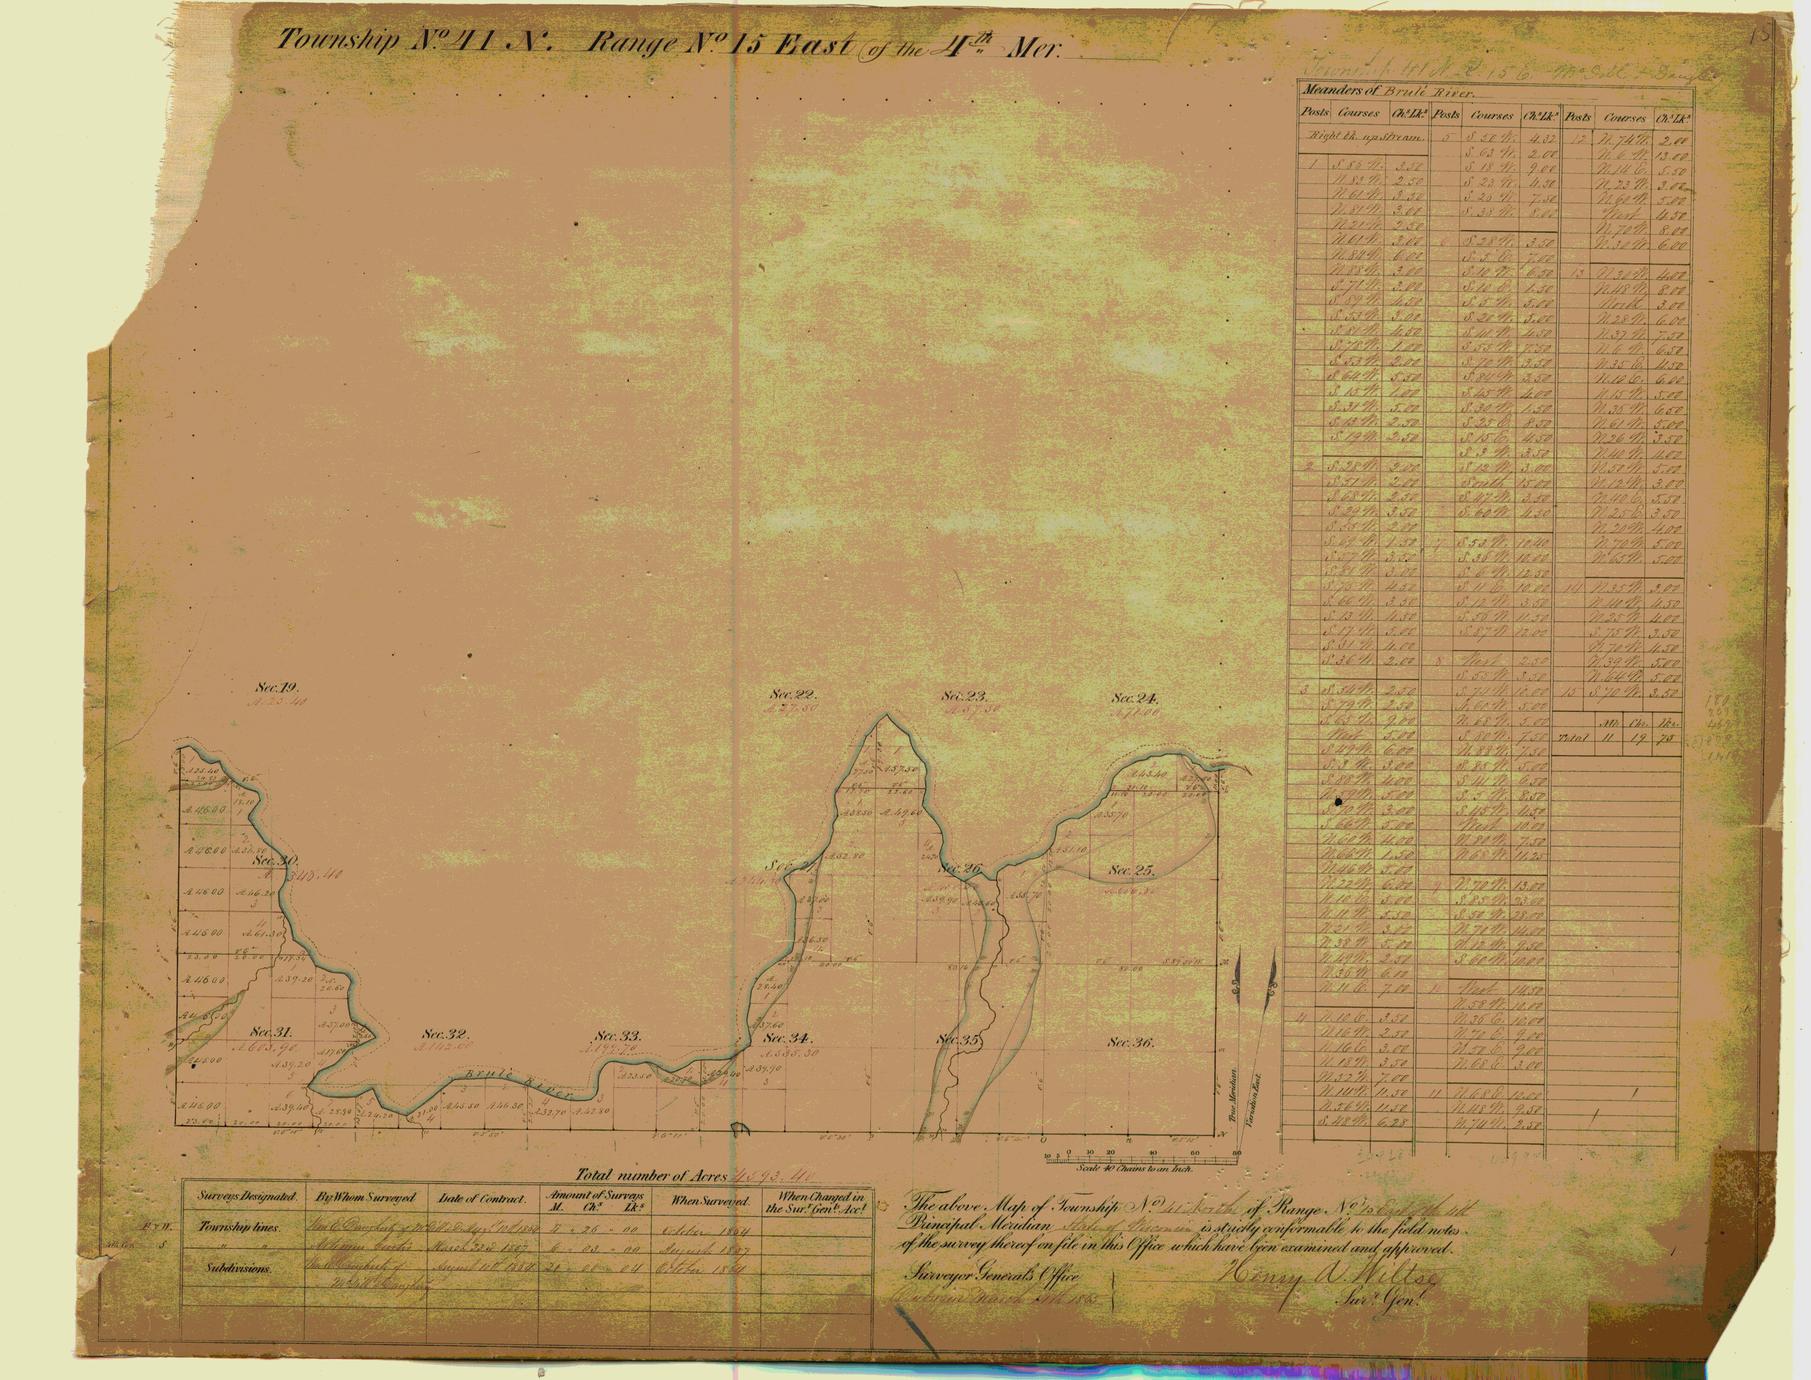 [Public Land Survey System map: Wisconsin Township 41 North, Range 15 East]